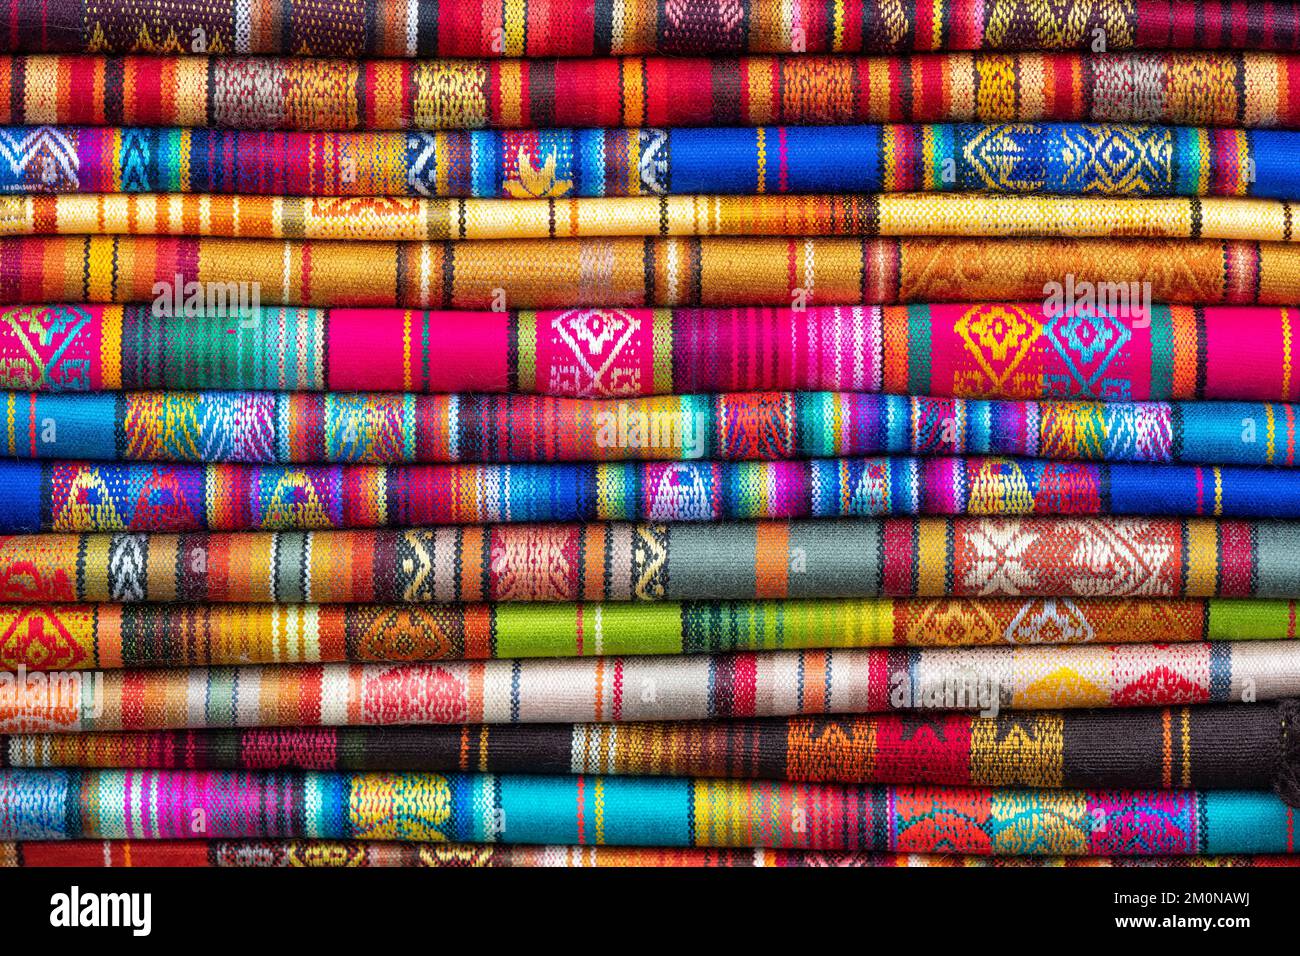 Vibrant colors of traditional Andes textiles on art and craft market, Otavalo, Ecuador. Textiles found in Bolivia, Peru and Ecuador. Stock Photo